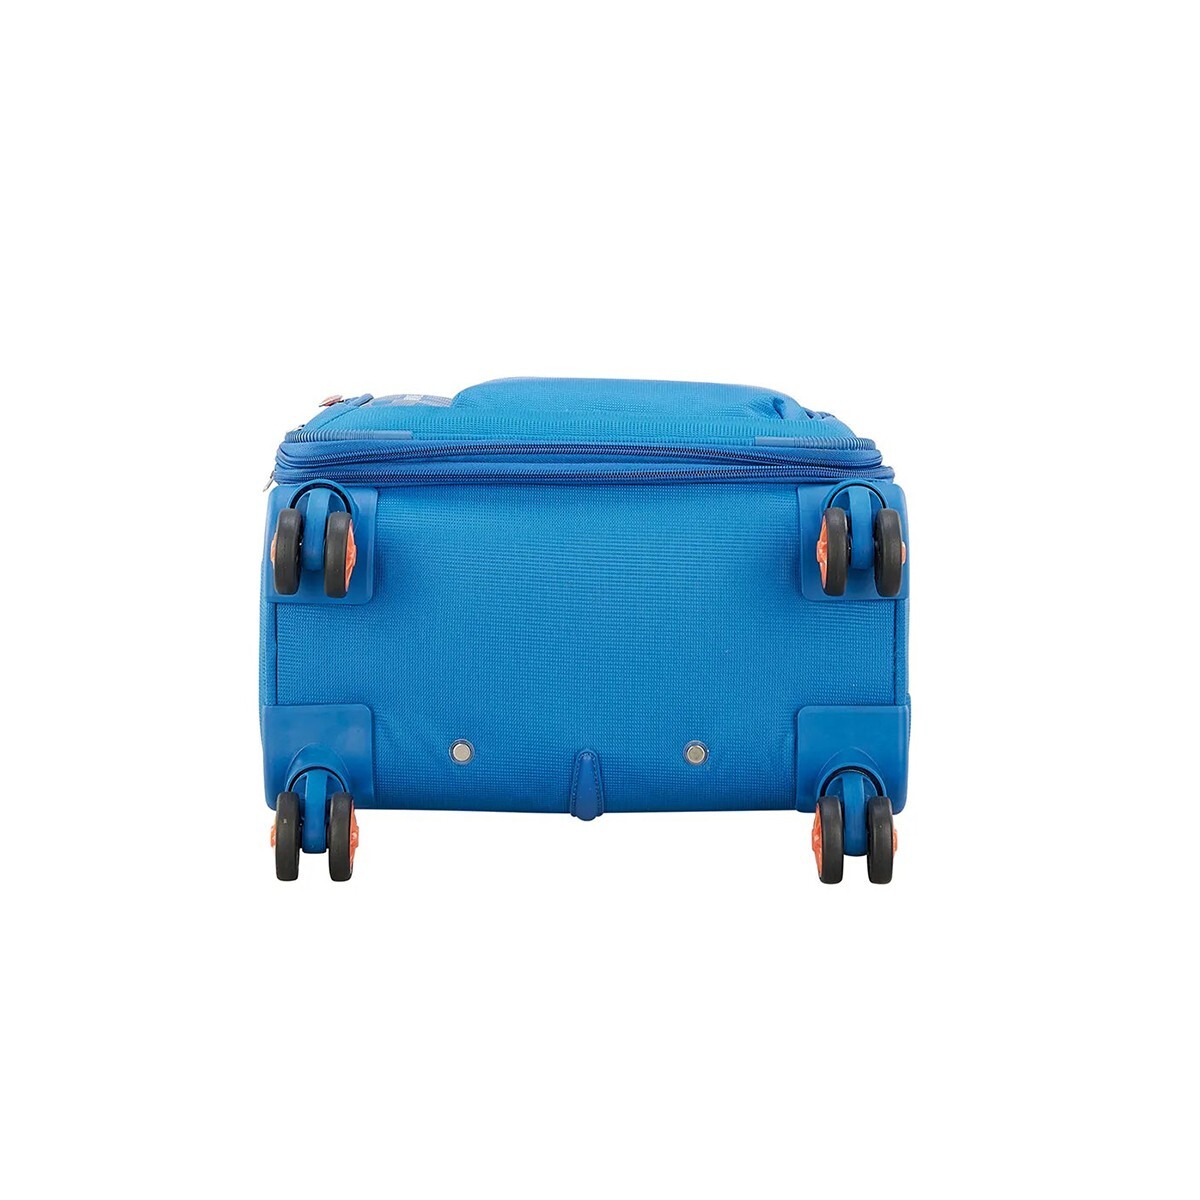 Skybags Soft Spinner Vangurad Plus 59cm Blue